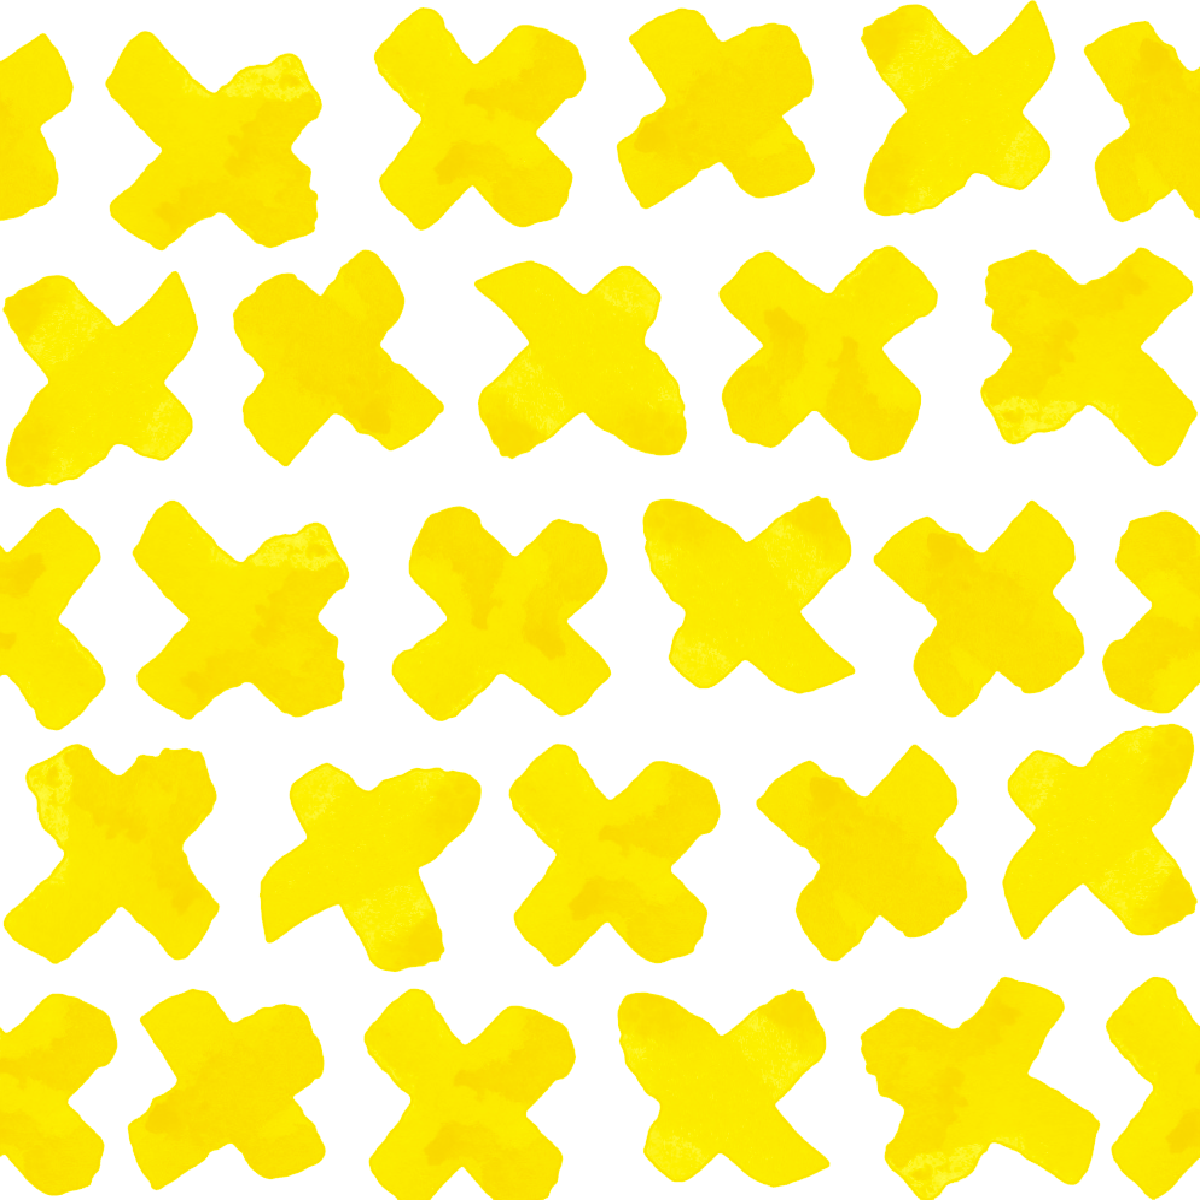 Wallpaper Double Roll / Yellow X's Wallpaper Katie Kime